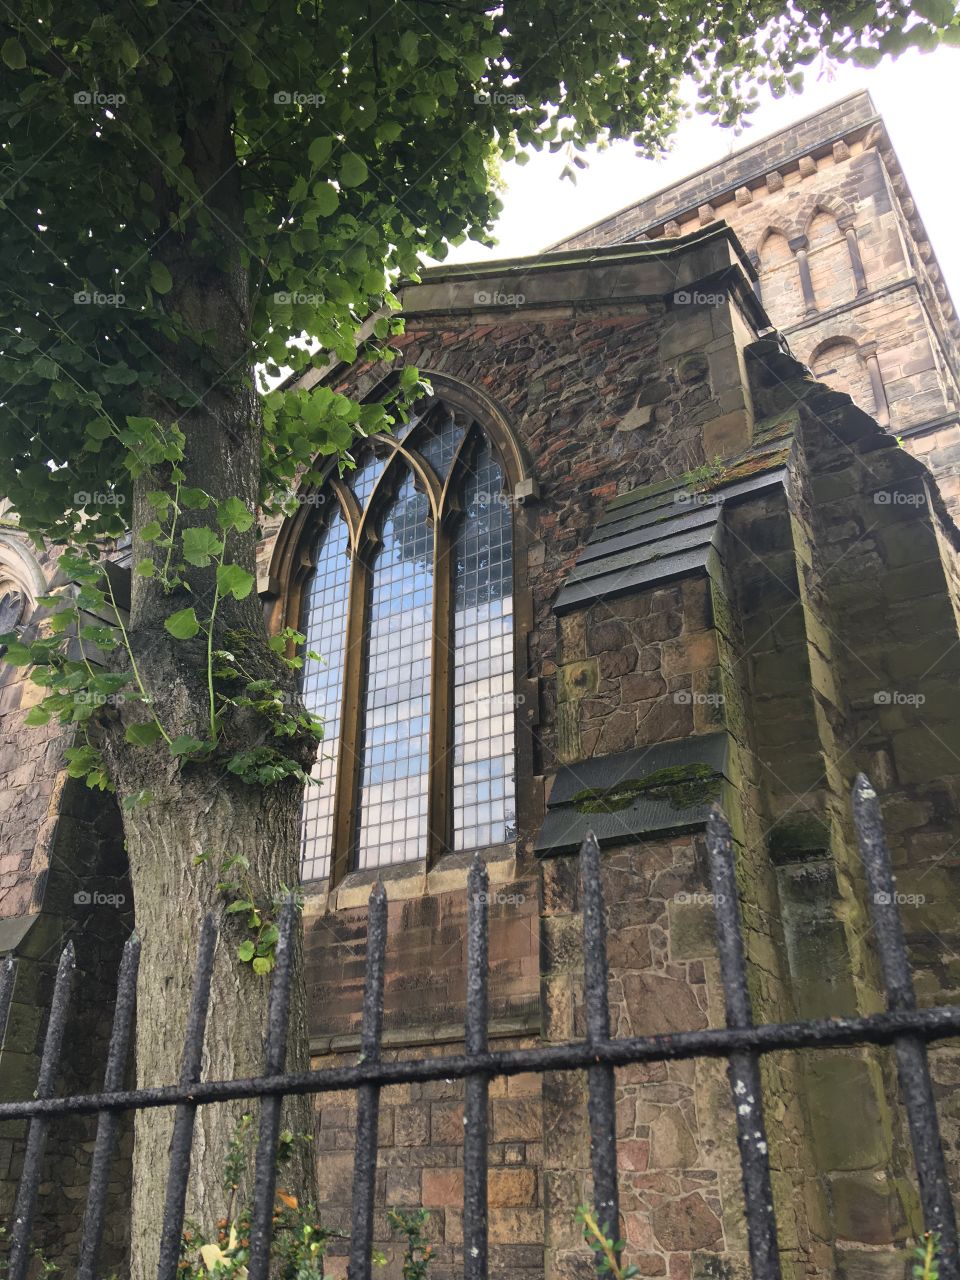 #mycityisbeautiful old church windows 